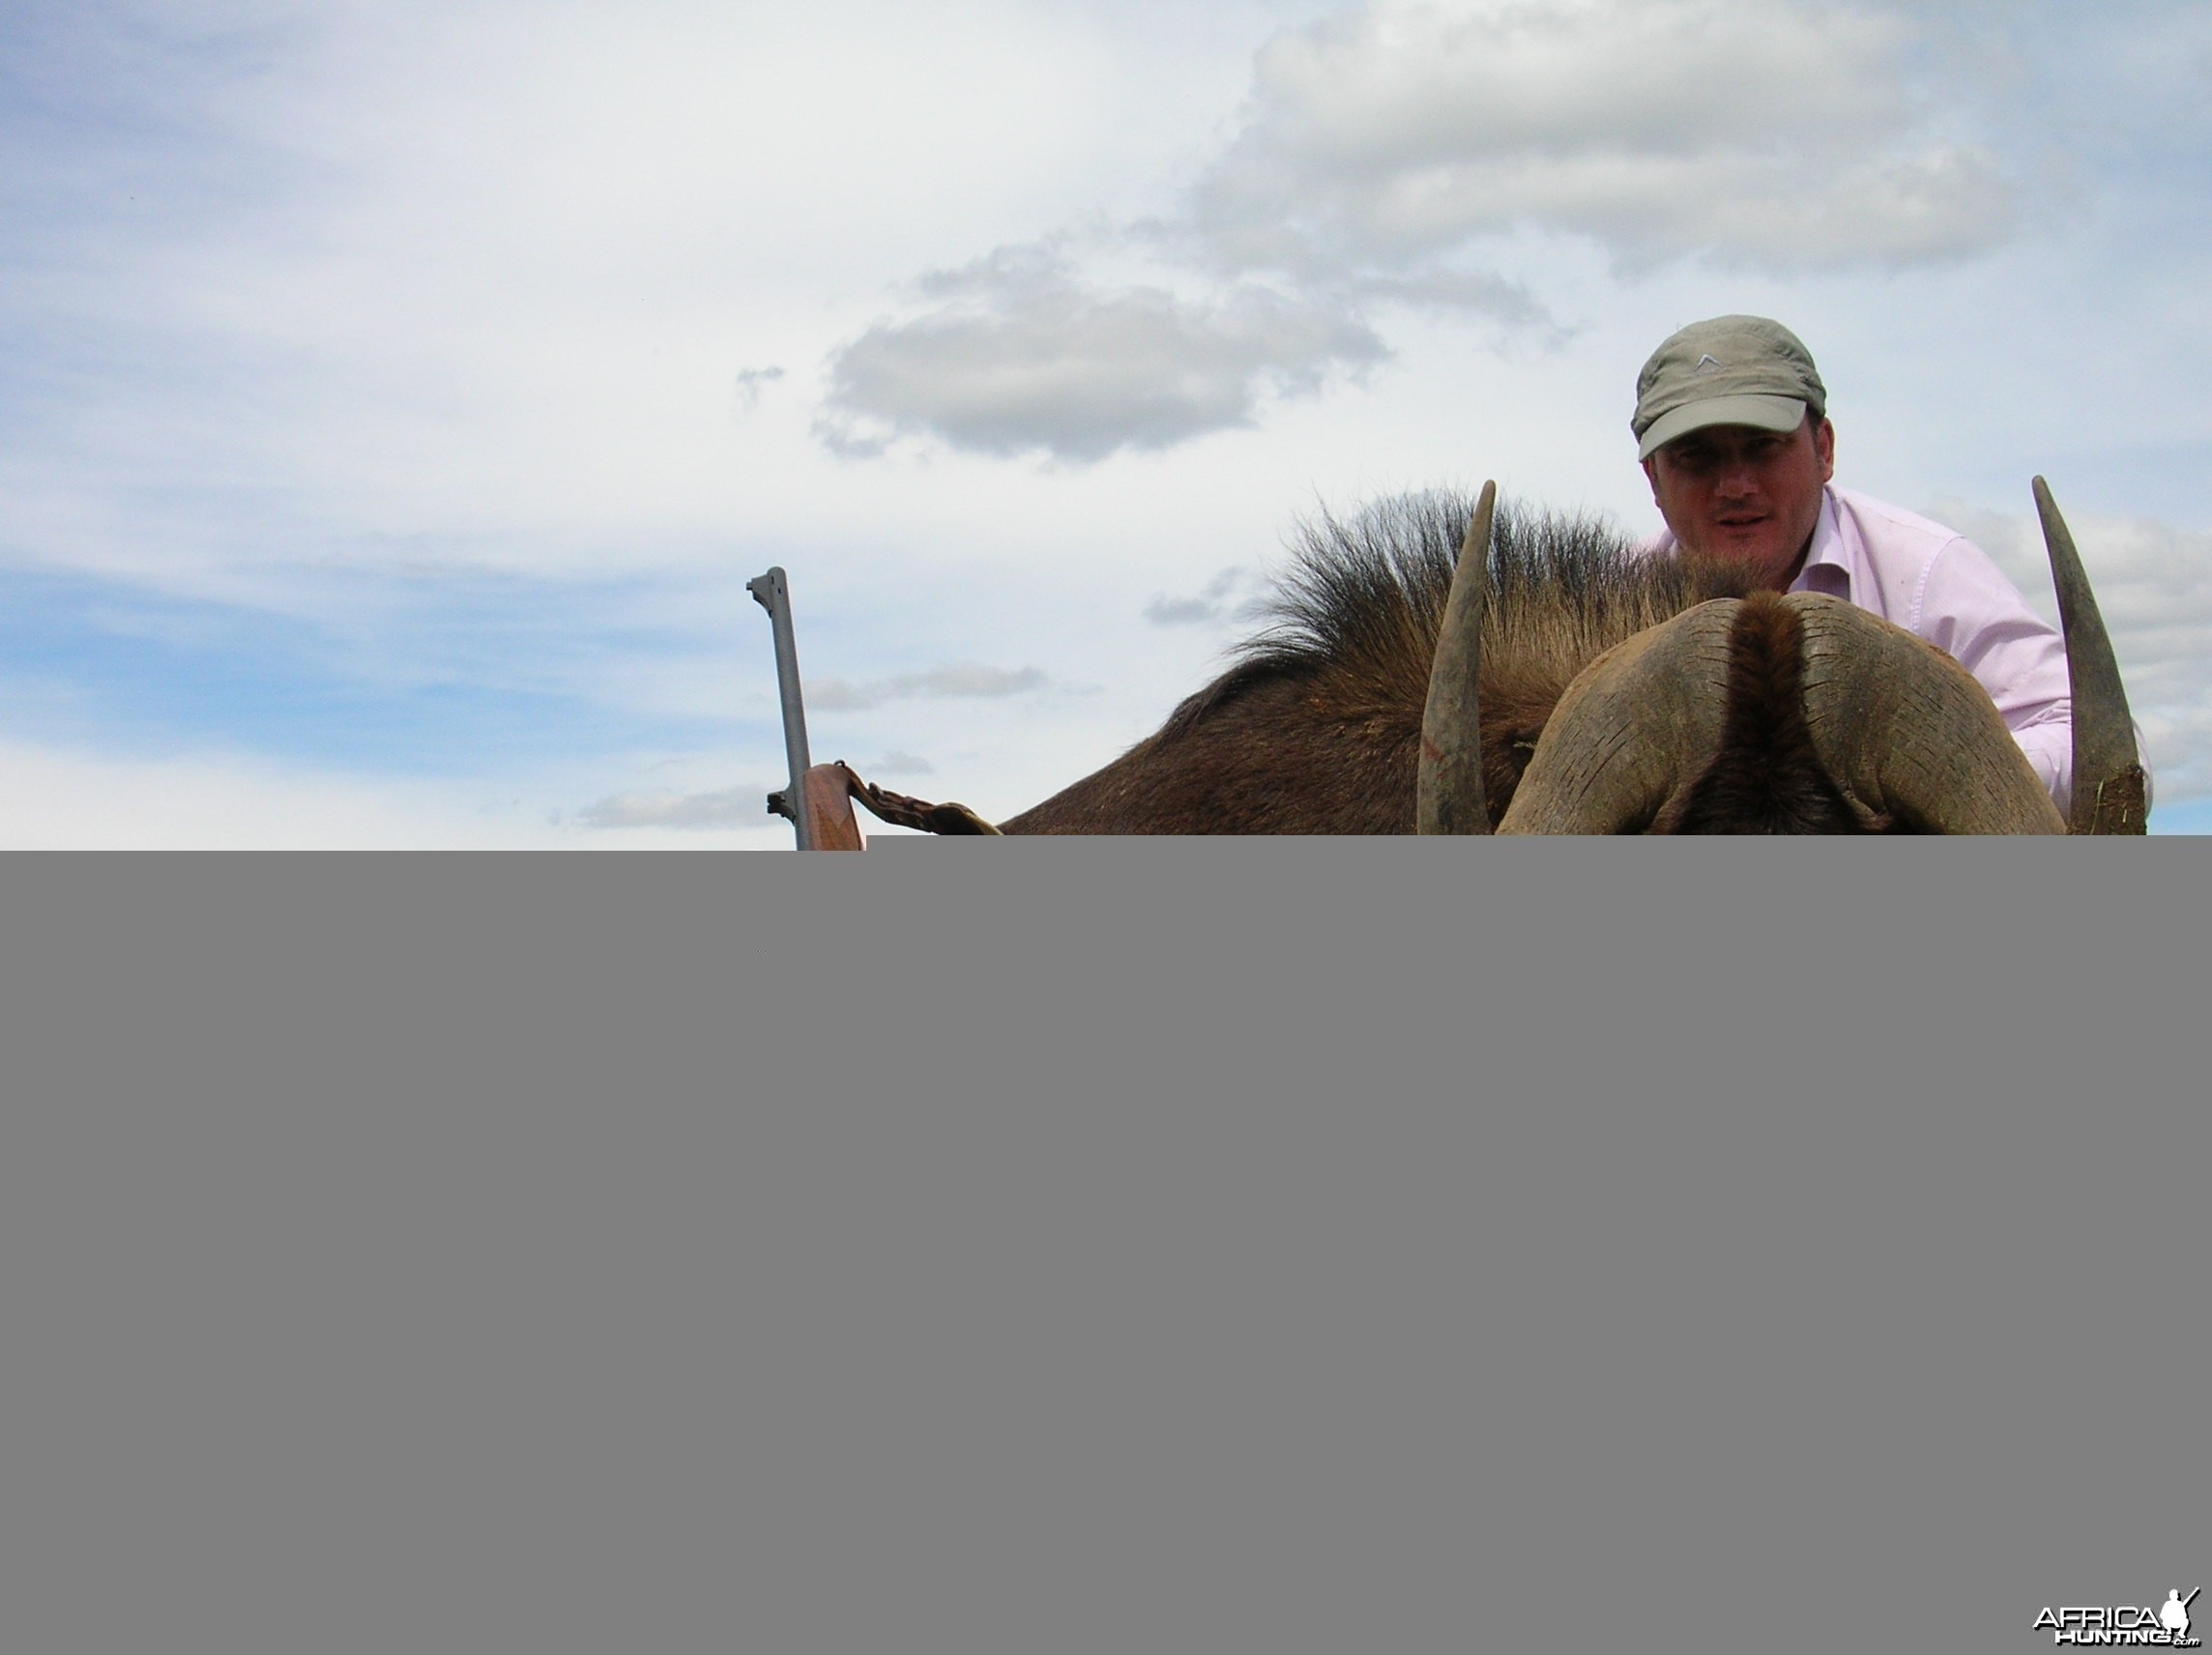 Hunting Black Gnu in Namibia